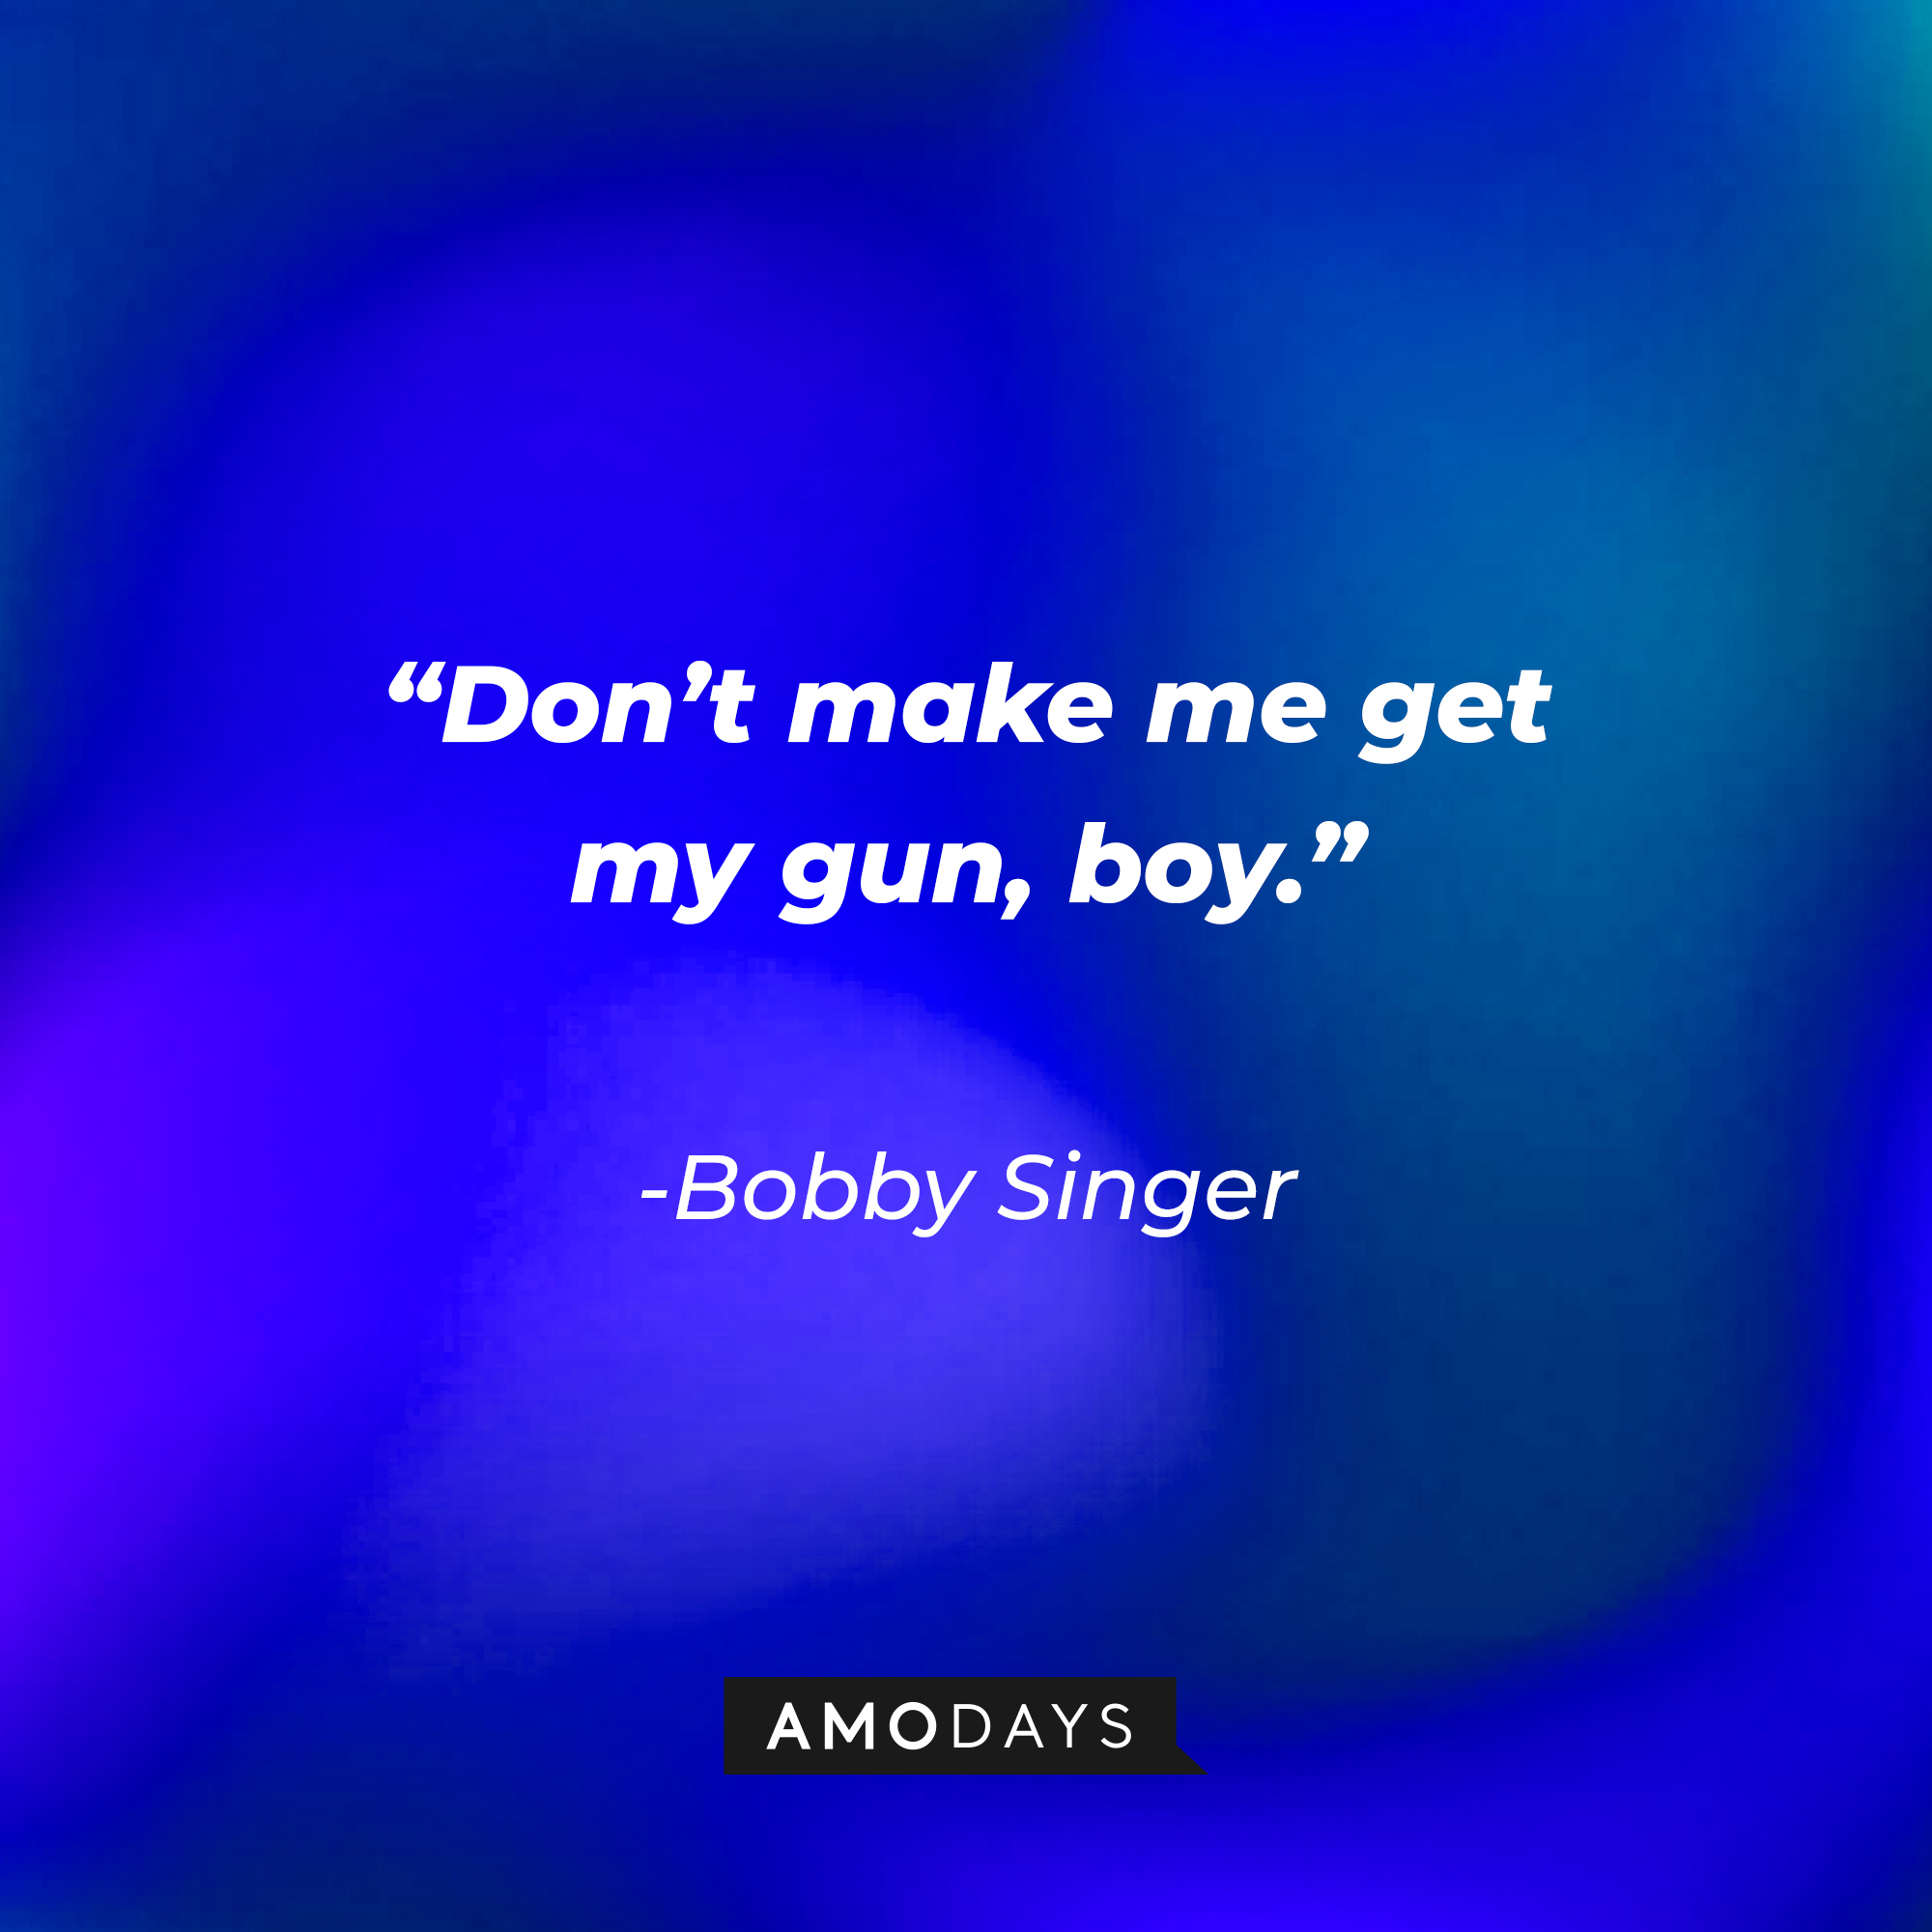 Bobby Singer's quote: "Don't make me get my gun, boy." | Source: Amodays